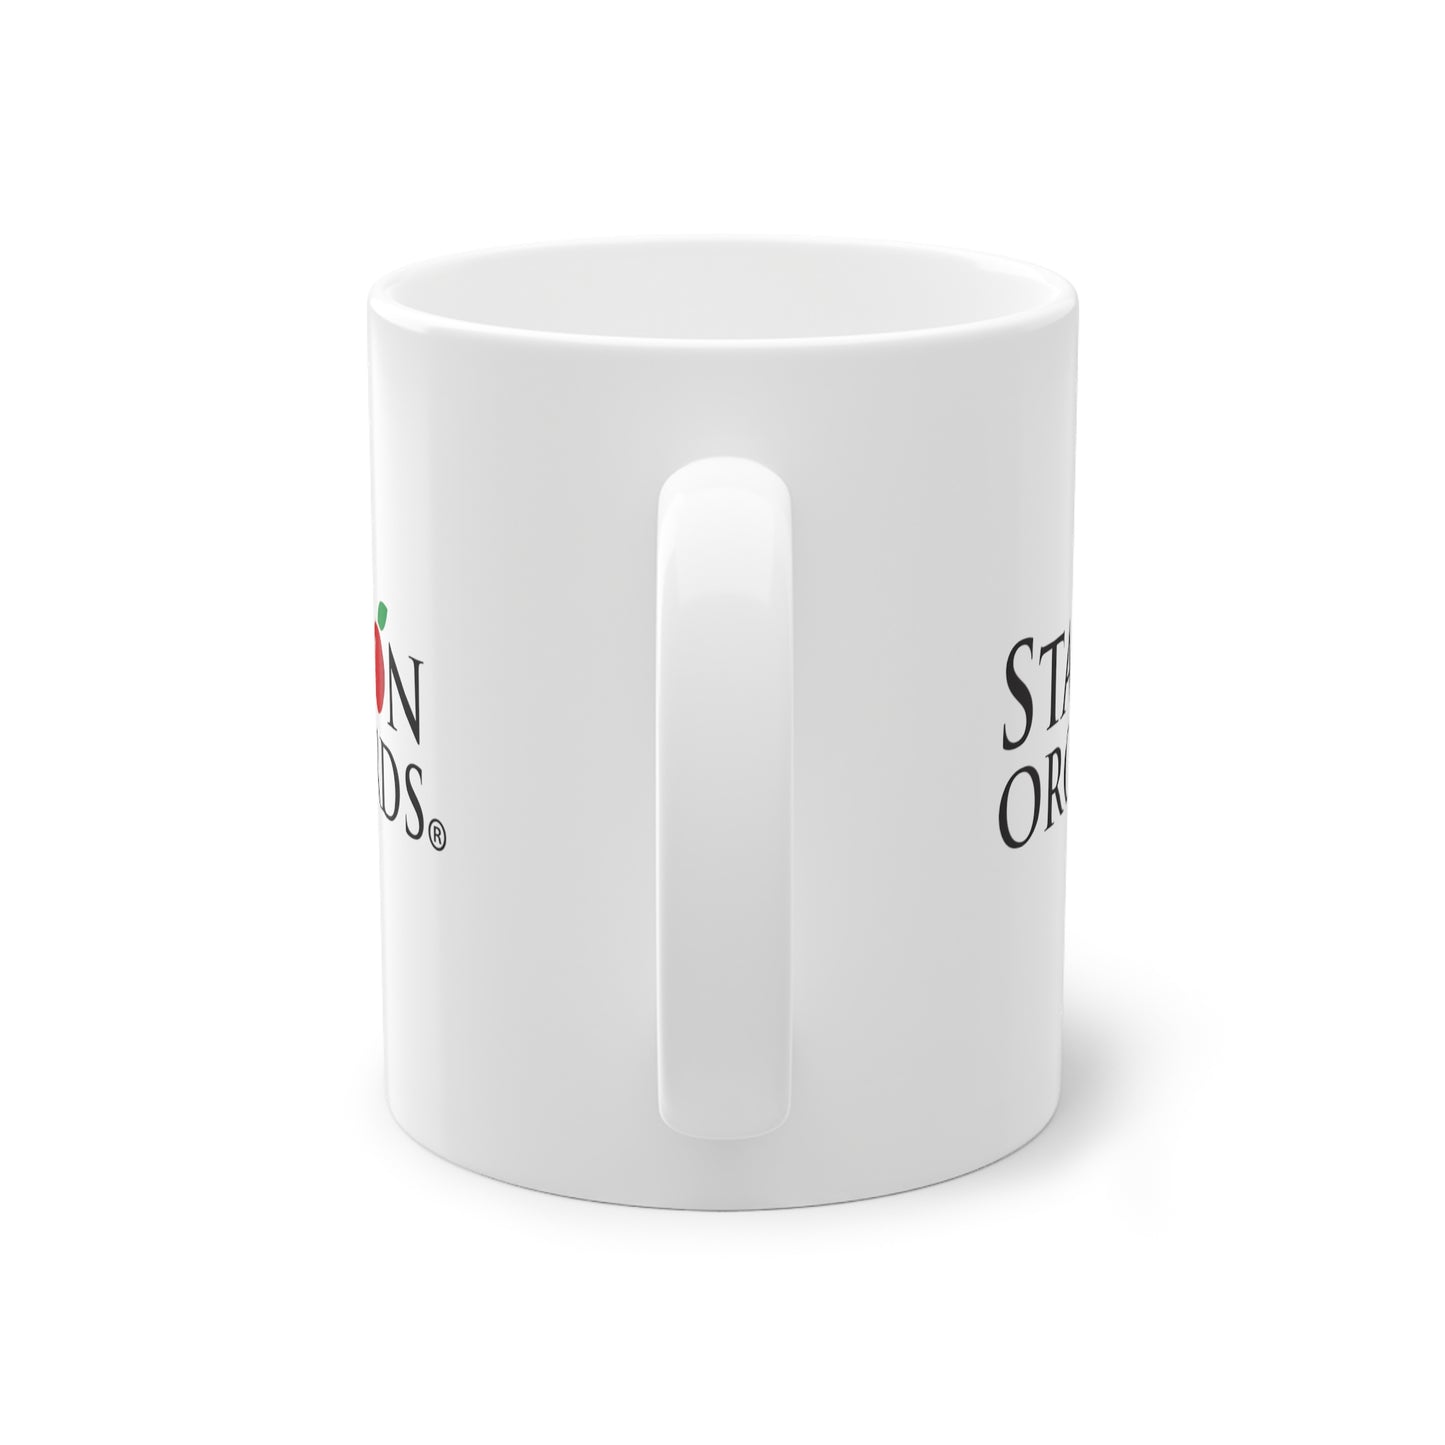 Standard Mug, 11oz with Stanton Orchards Logo